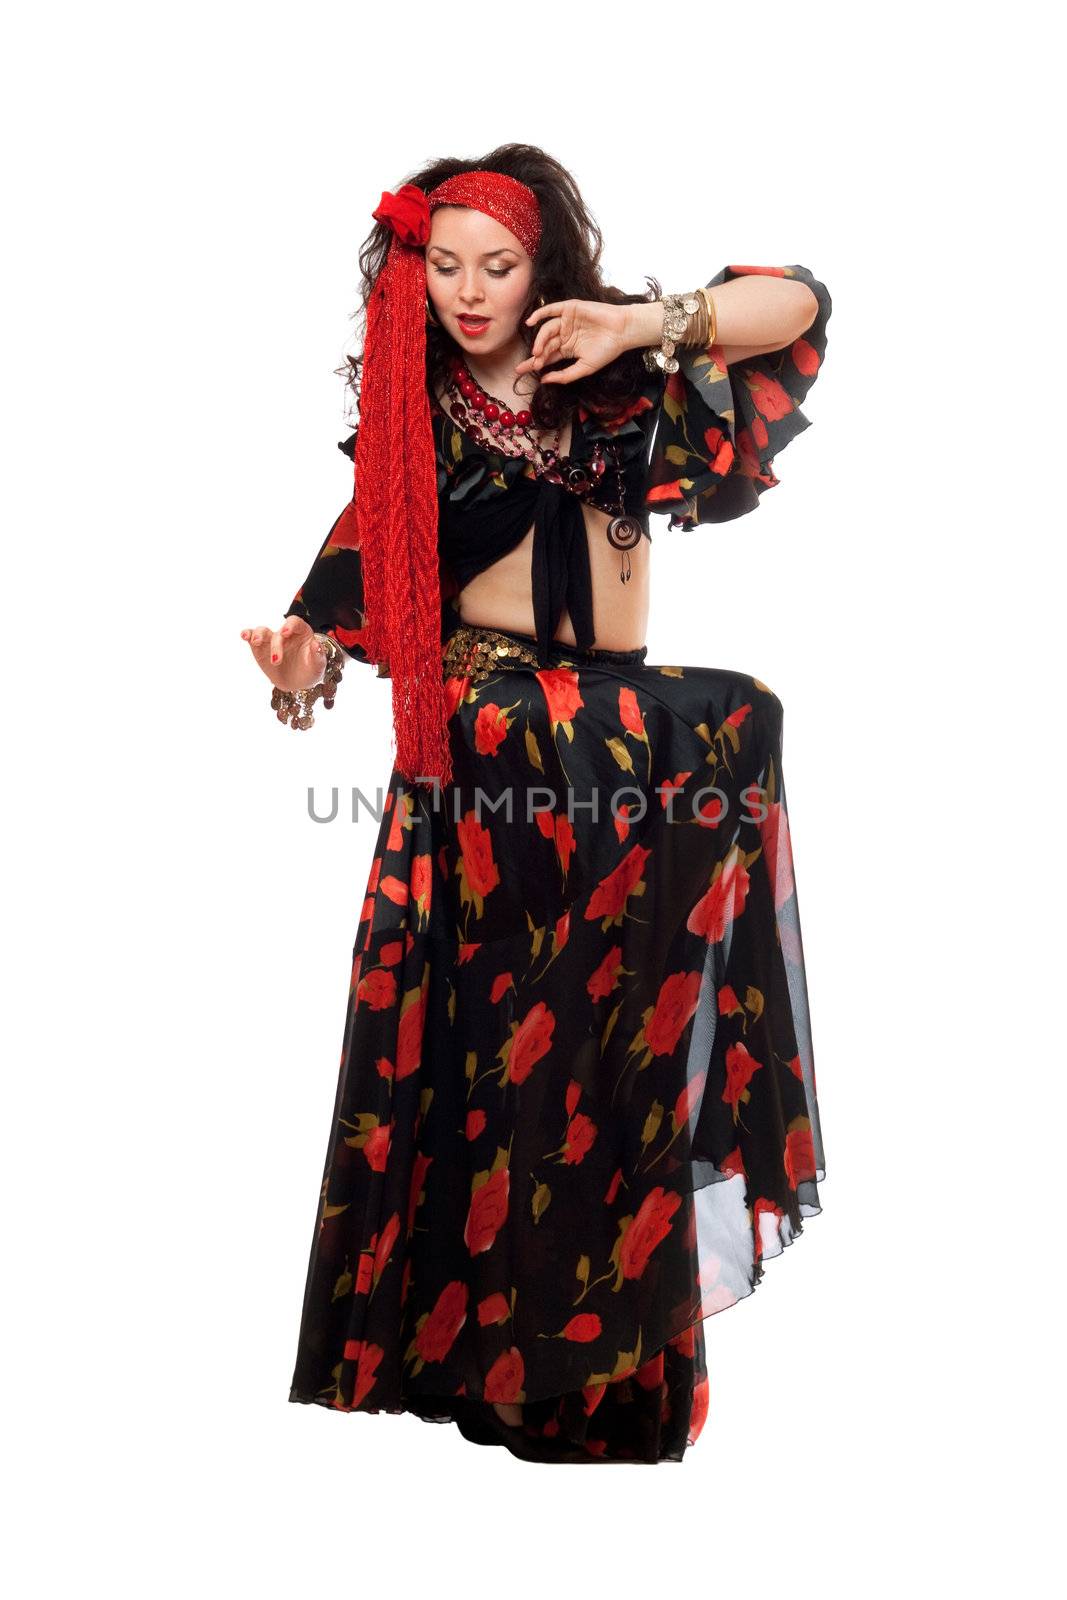 Sensual gypsy woman in a black skirt by acidgrey